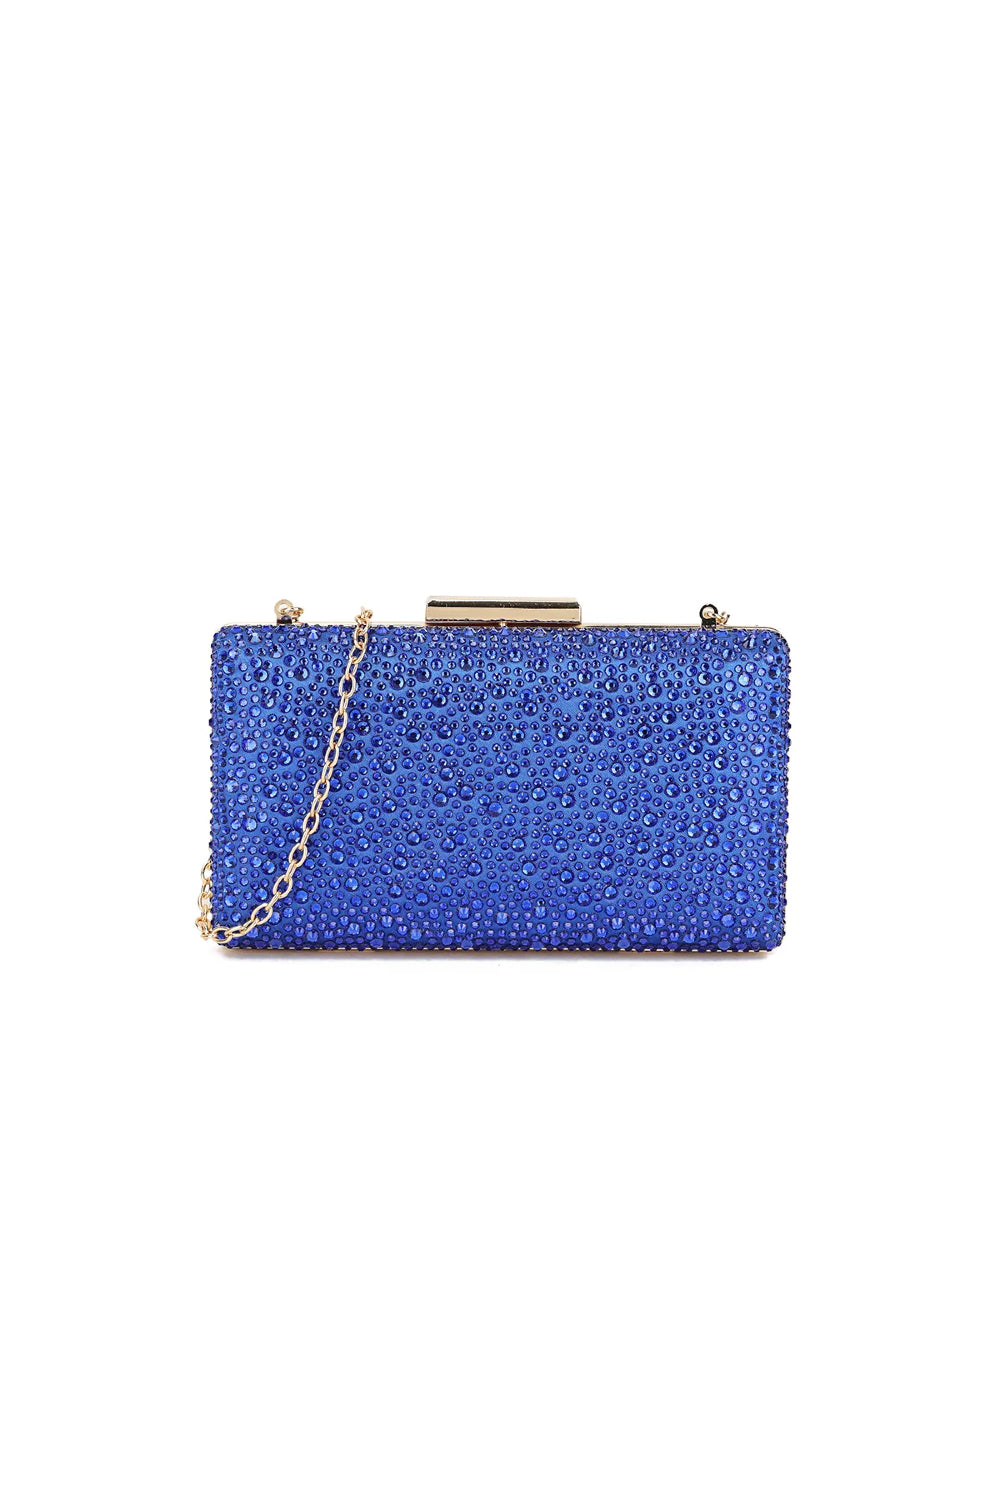 Royal Blue Glitter Evening Clutch Bag ALH3105